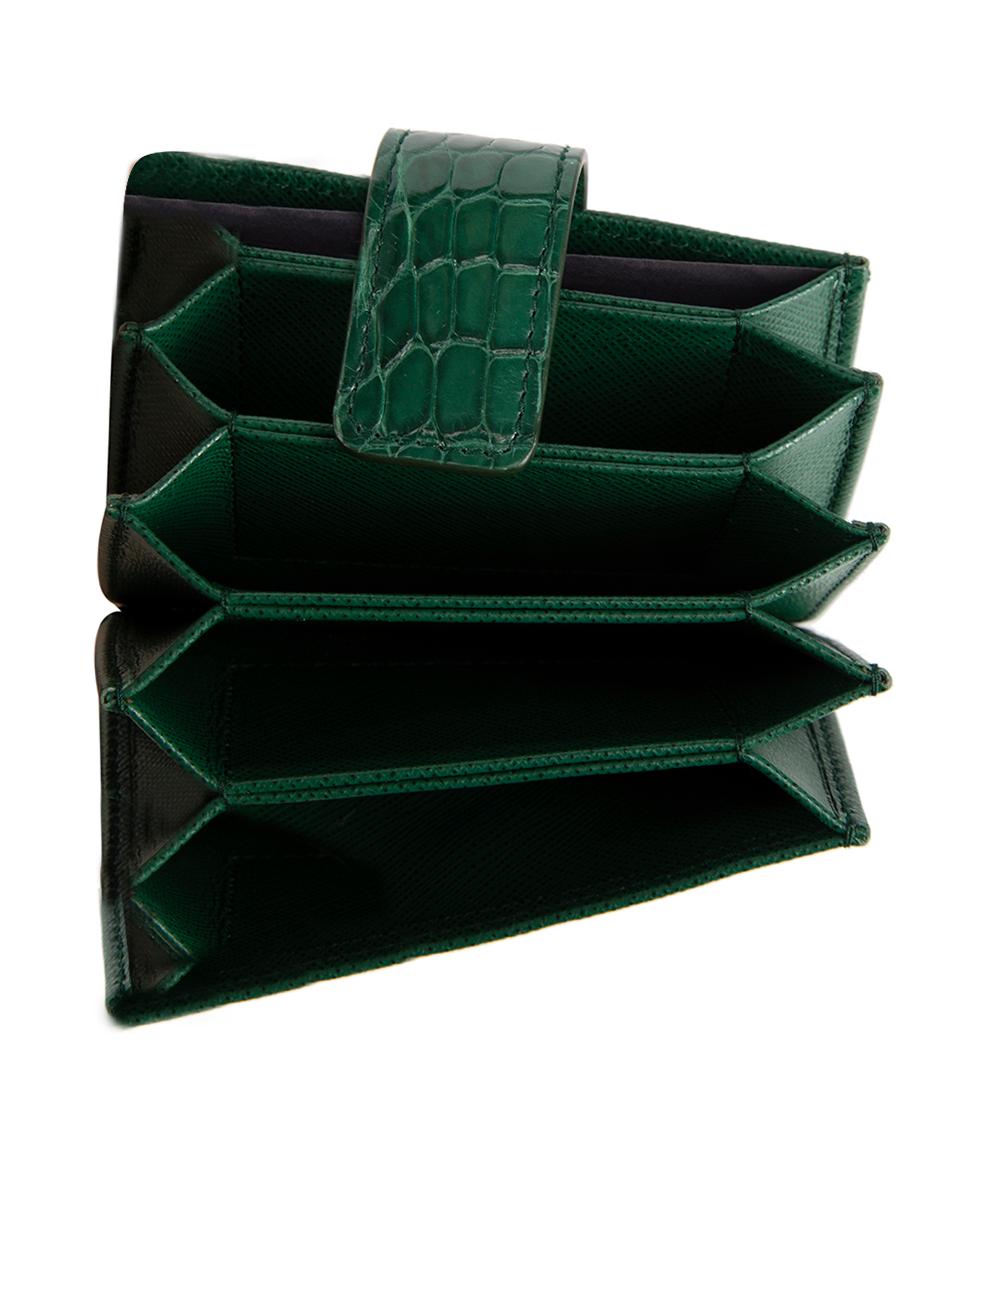 Prada Green Saffiano Leather Accordion Cardholder 1